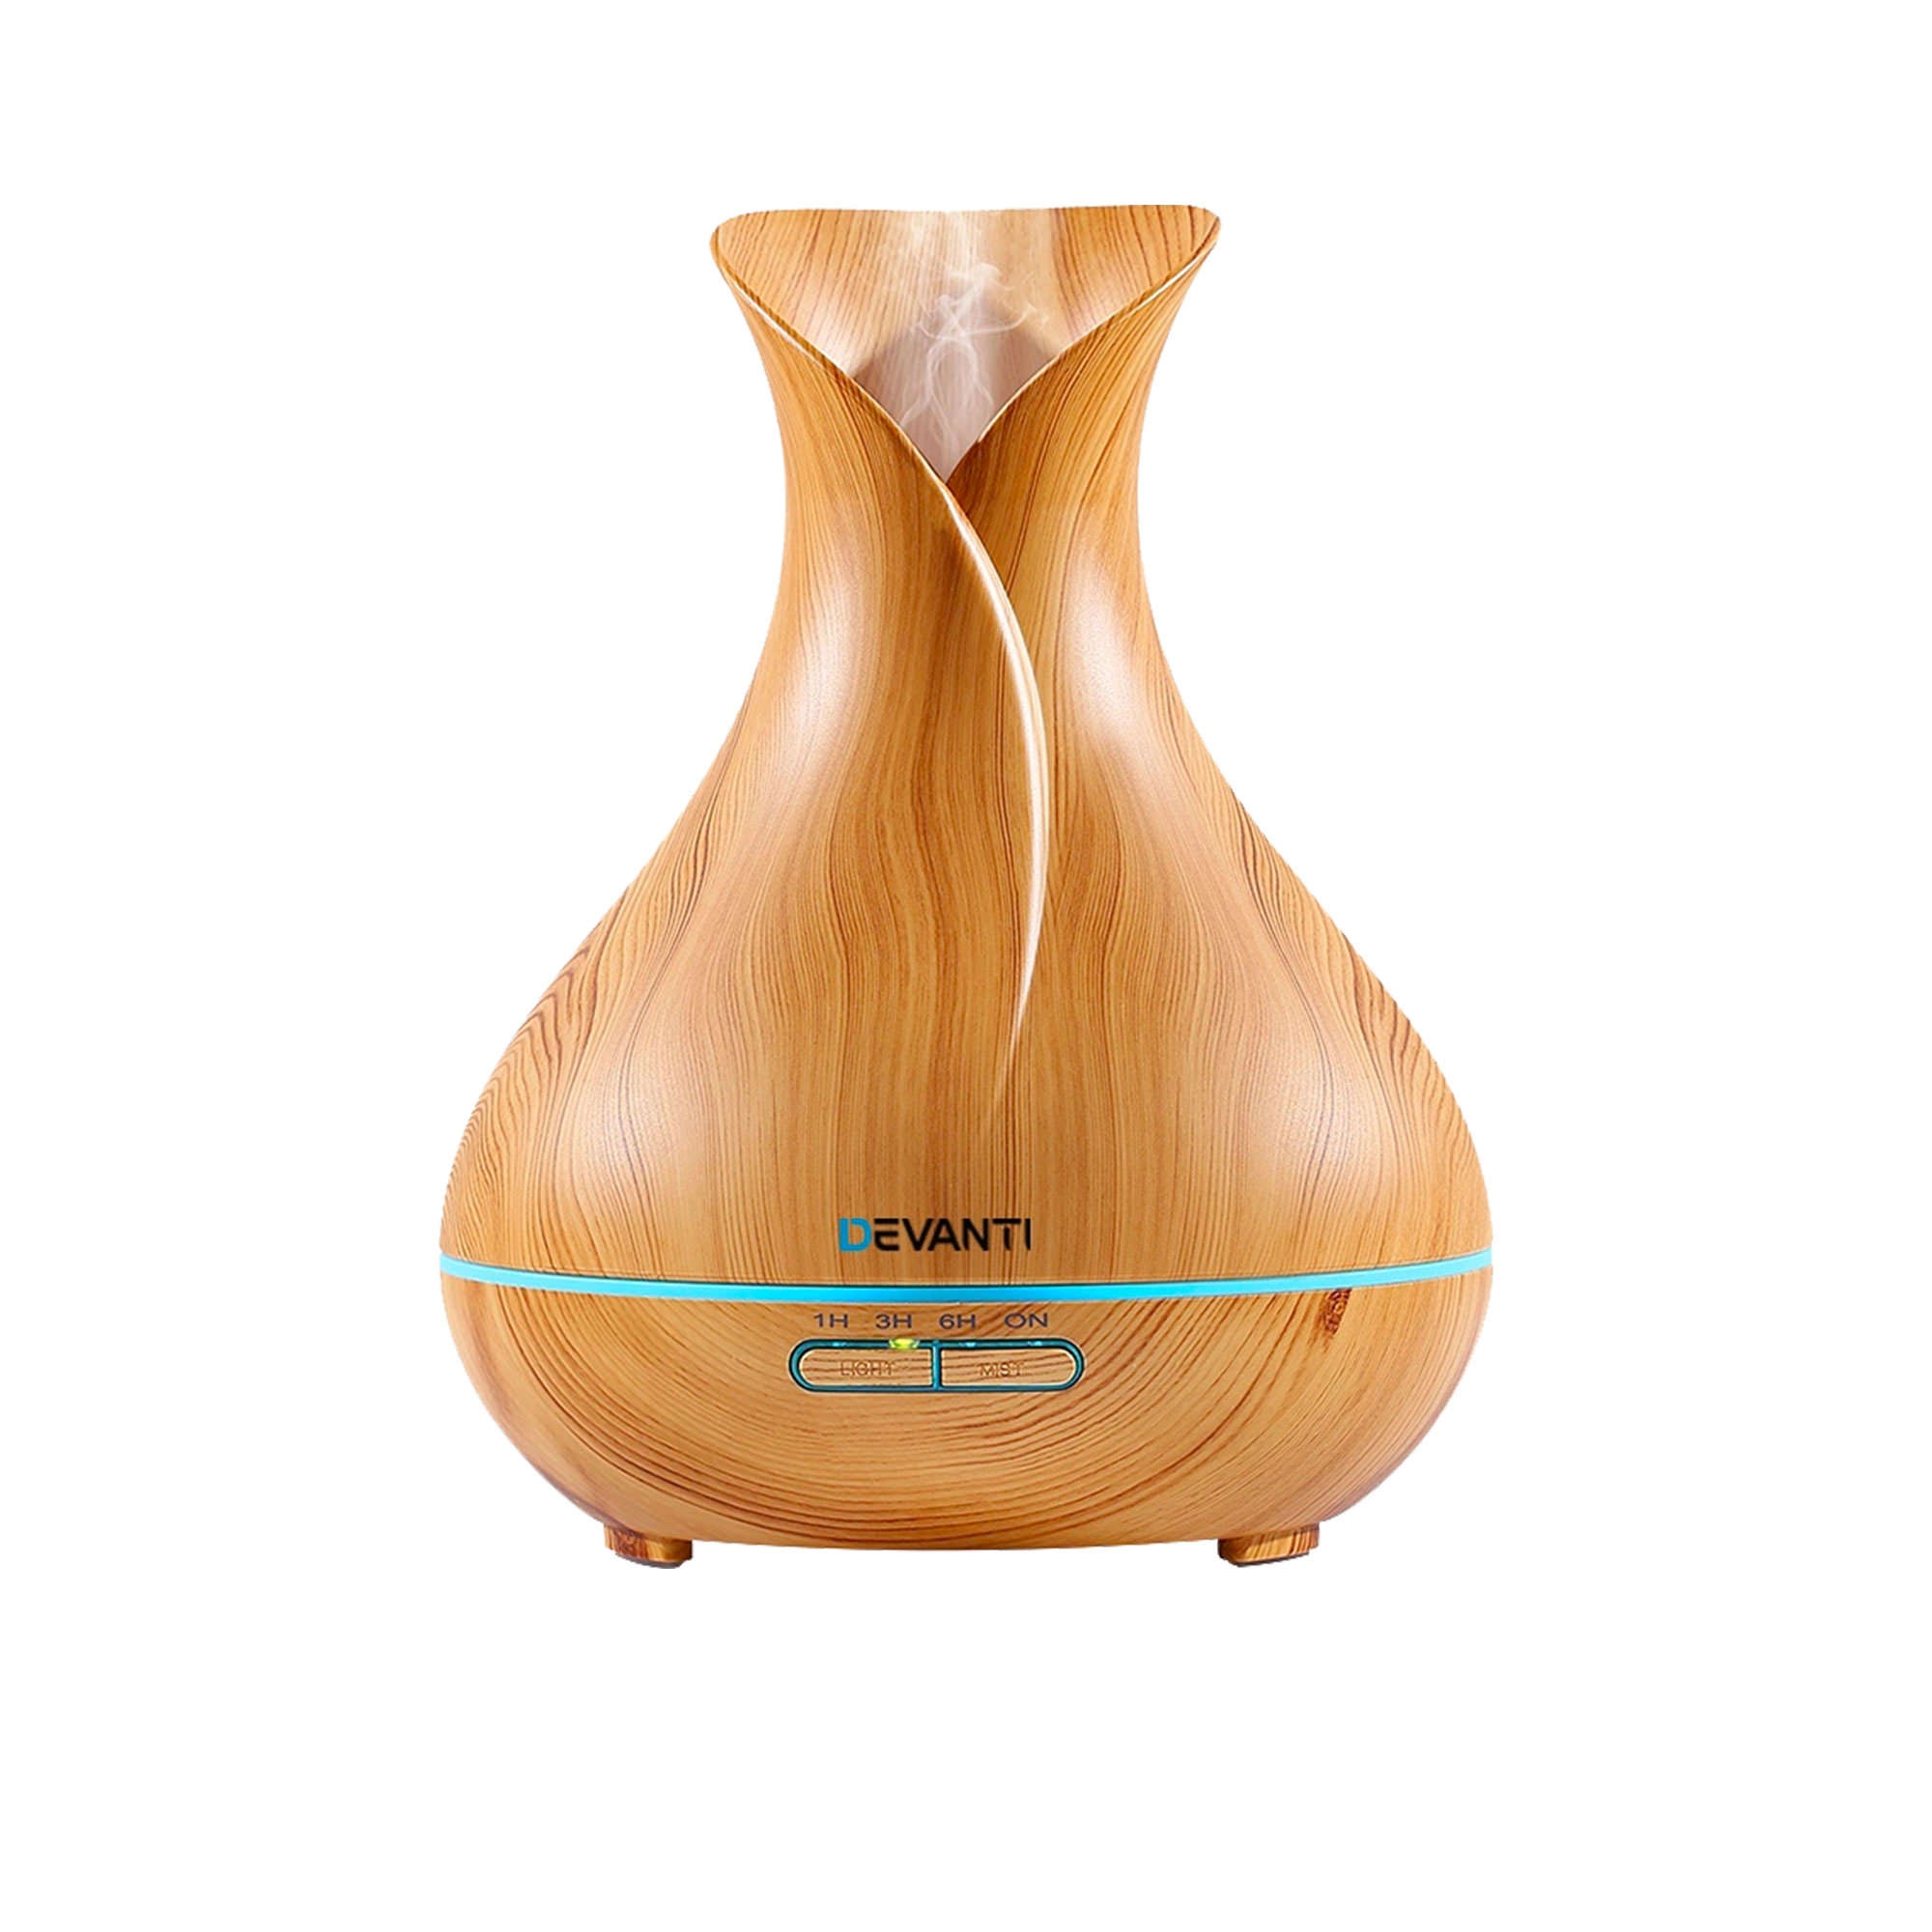 Devanti Aroma Diffuser 400ml Light Wood Vase Image 1